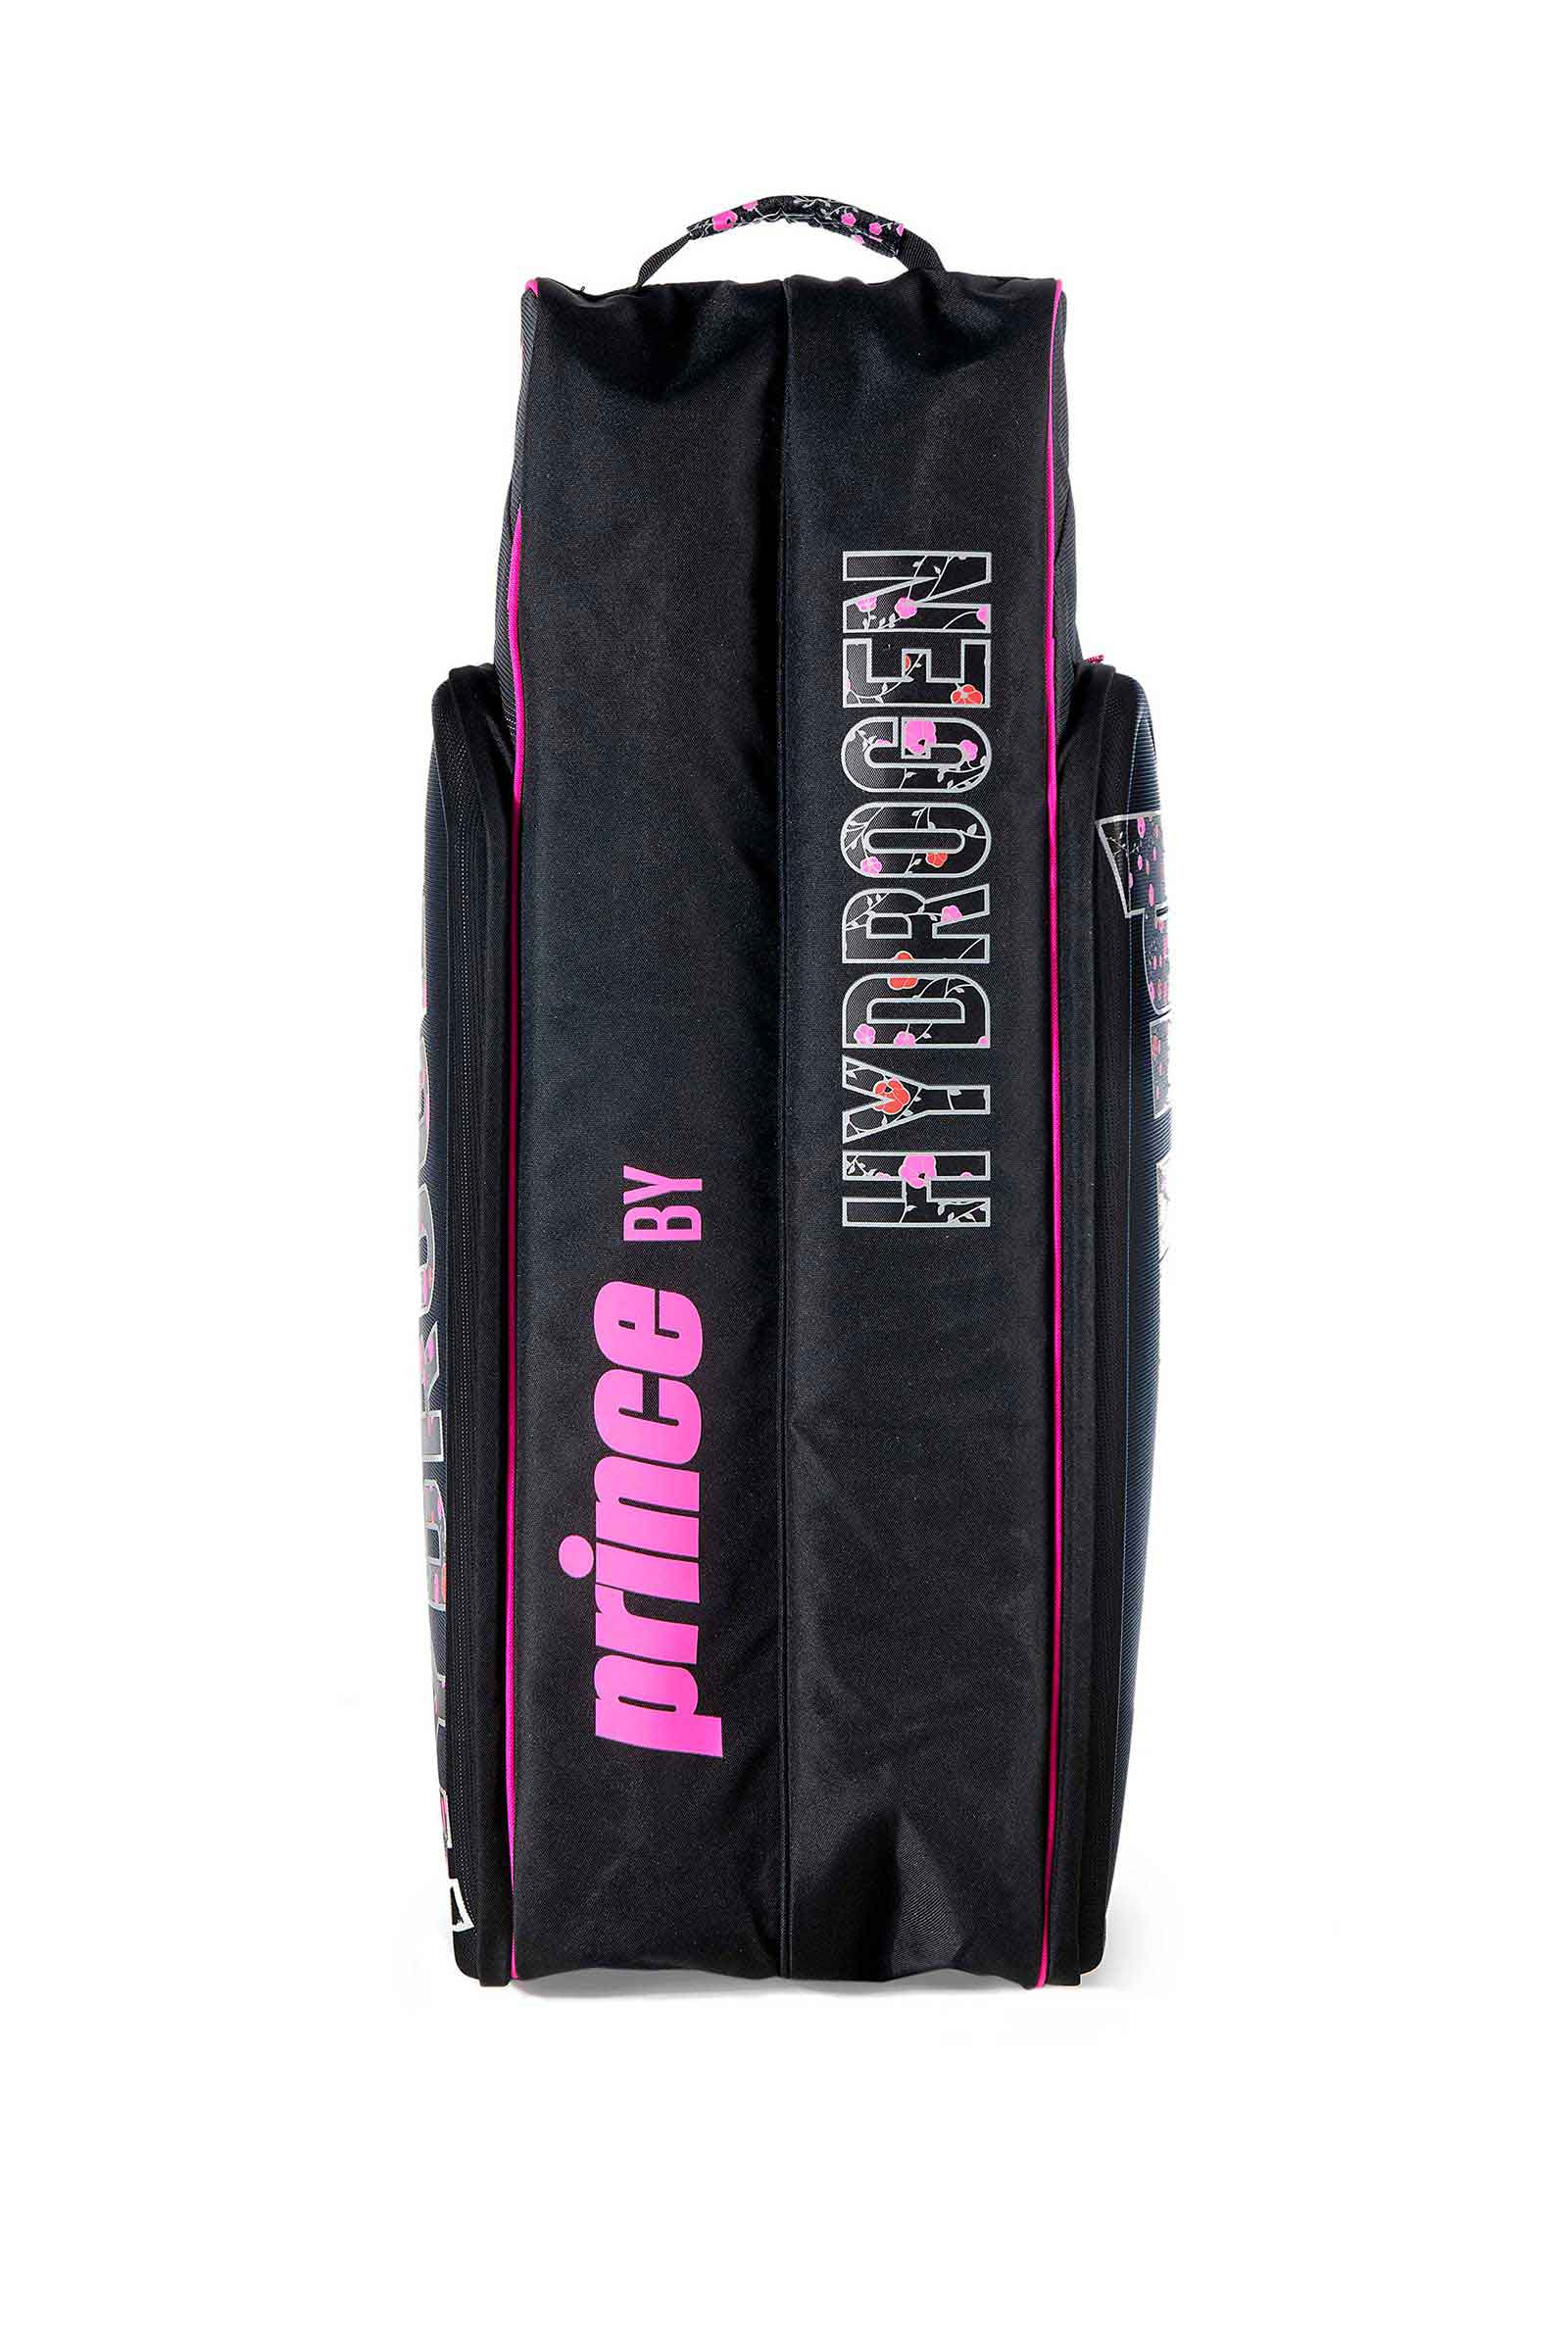 LADY MARY 9 RACKETS BAG PRINCE BY HYDROGEN - BLACK,FLUO FUCHSIA - Hydrogen - Luxury Sportwear